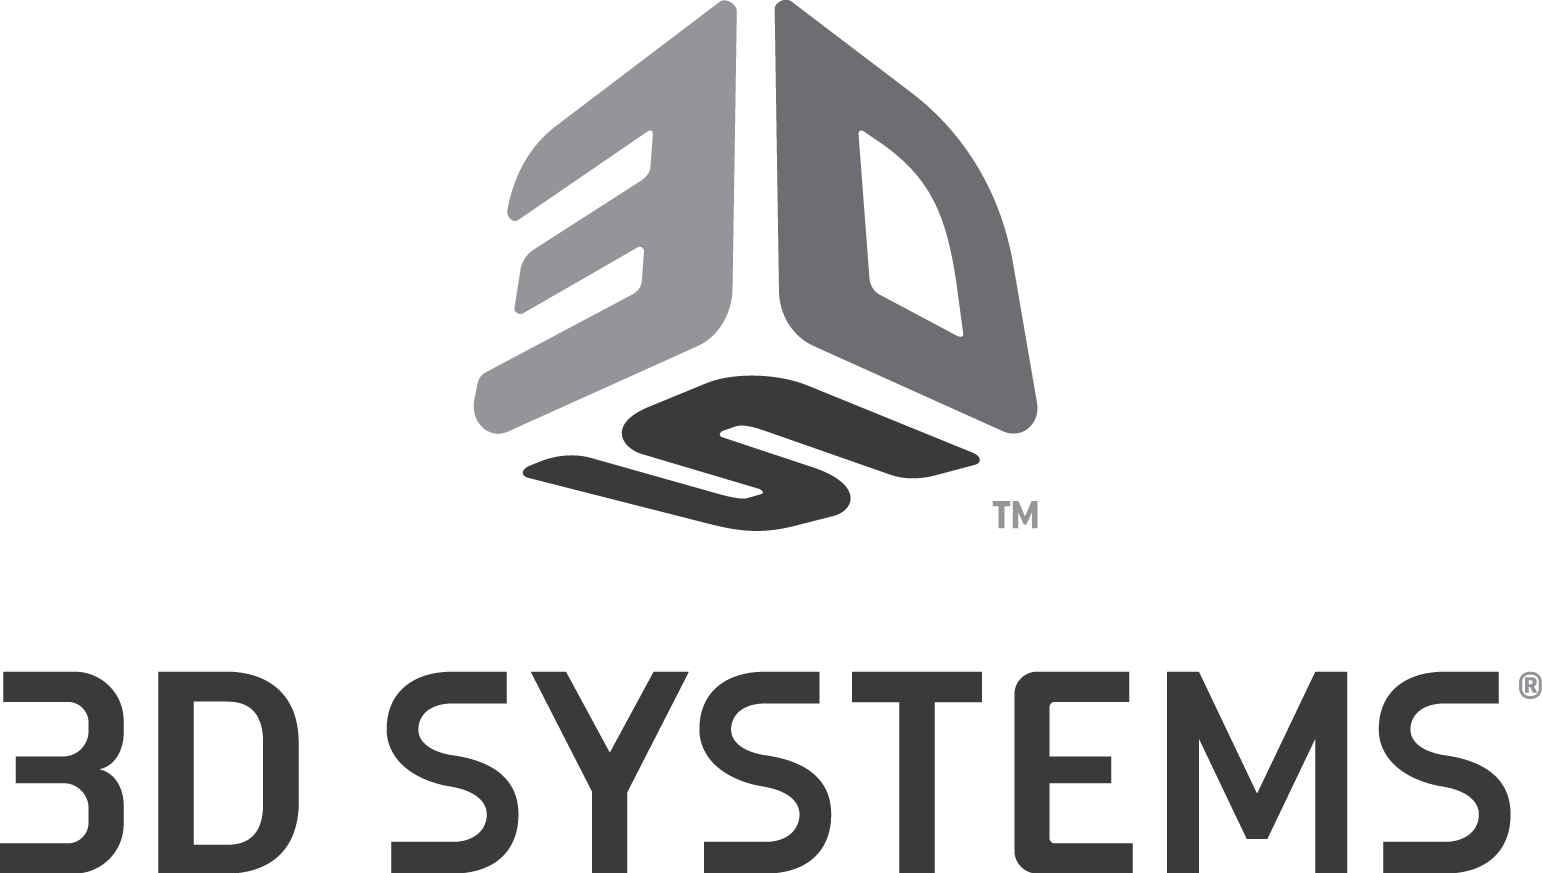 3d systems logos, emblem, symbols #9061